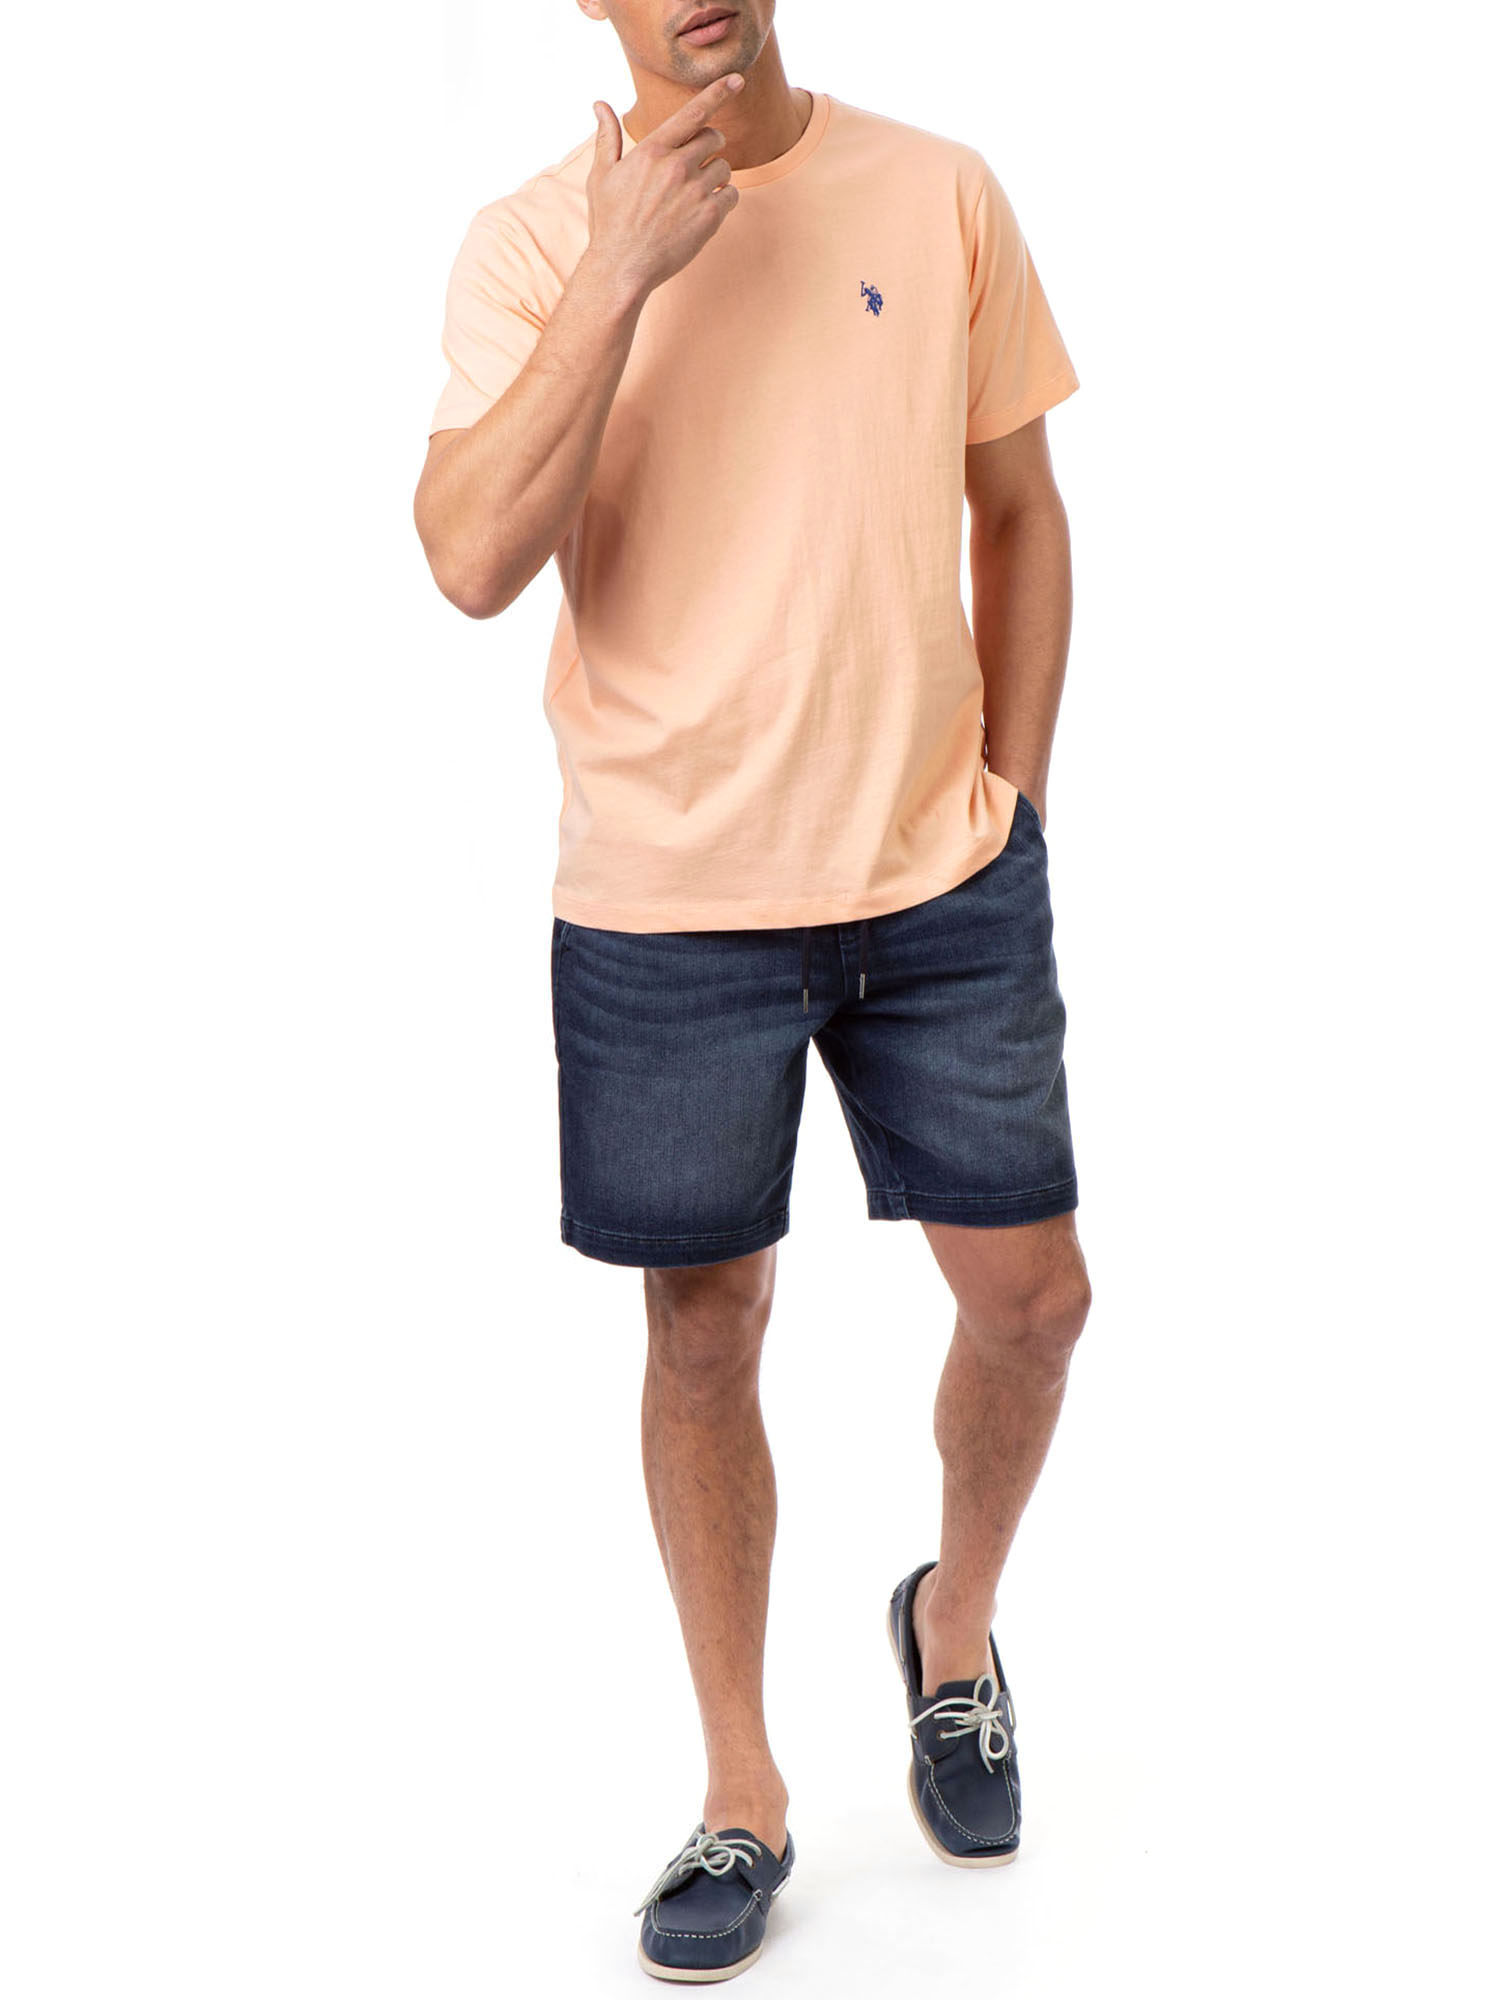 U.S. Polo Assn. Men's Short Sleeve Crew Neck T-Shirt - image 2 of 4